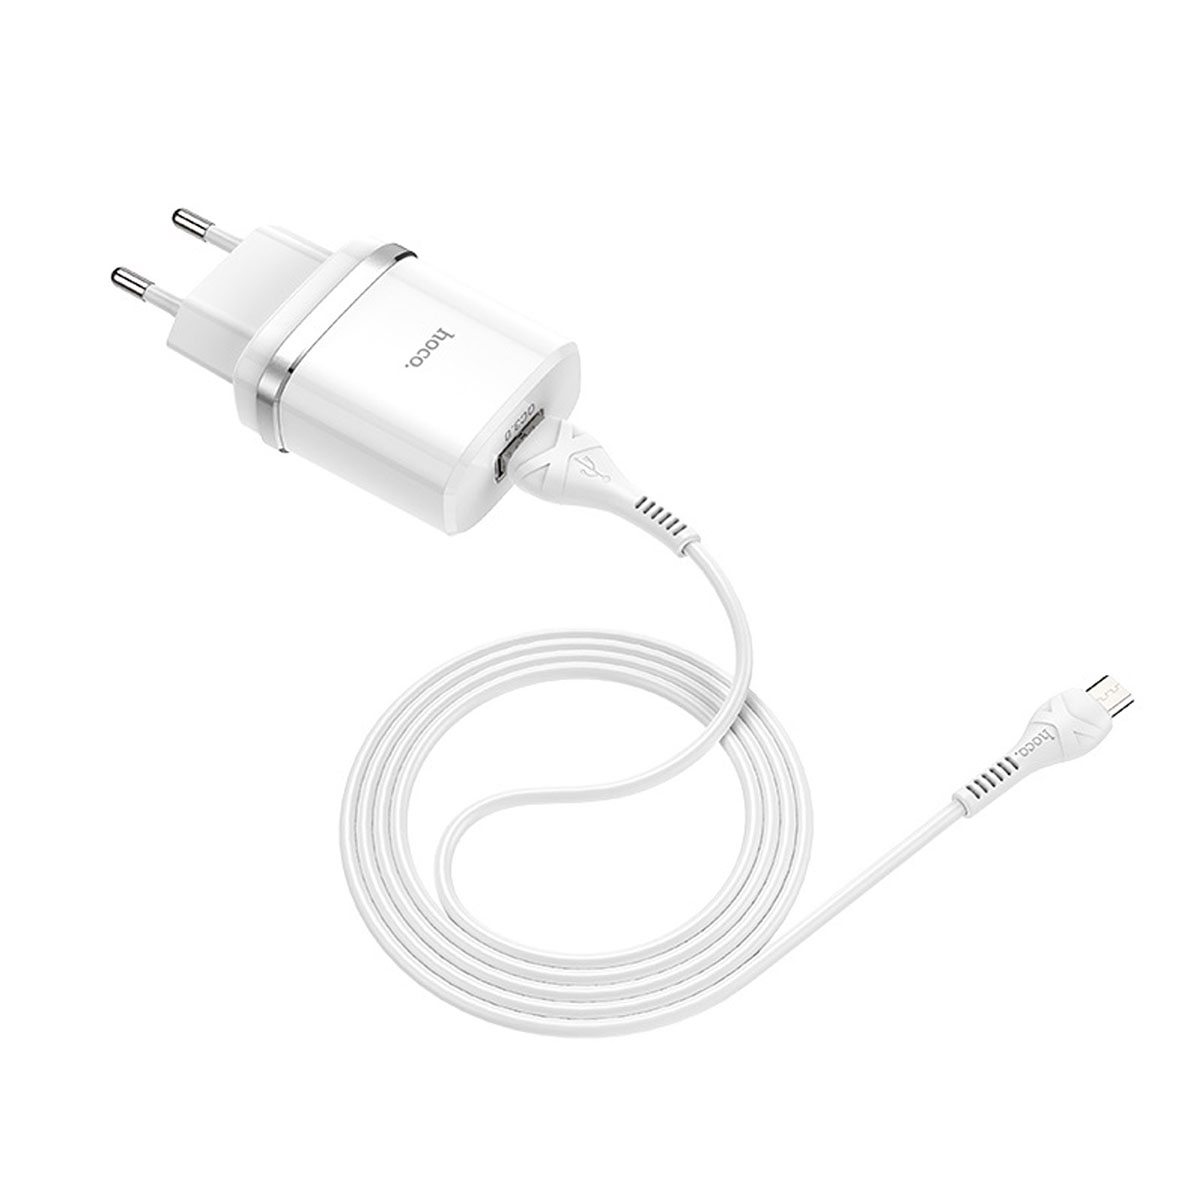 HOCO C12Q Smart CЗУ (Сетевое зарядное устройство) QC3.0, 1 USB, c кабелем Micro USB, цвет белый.